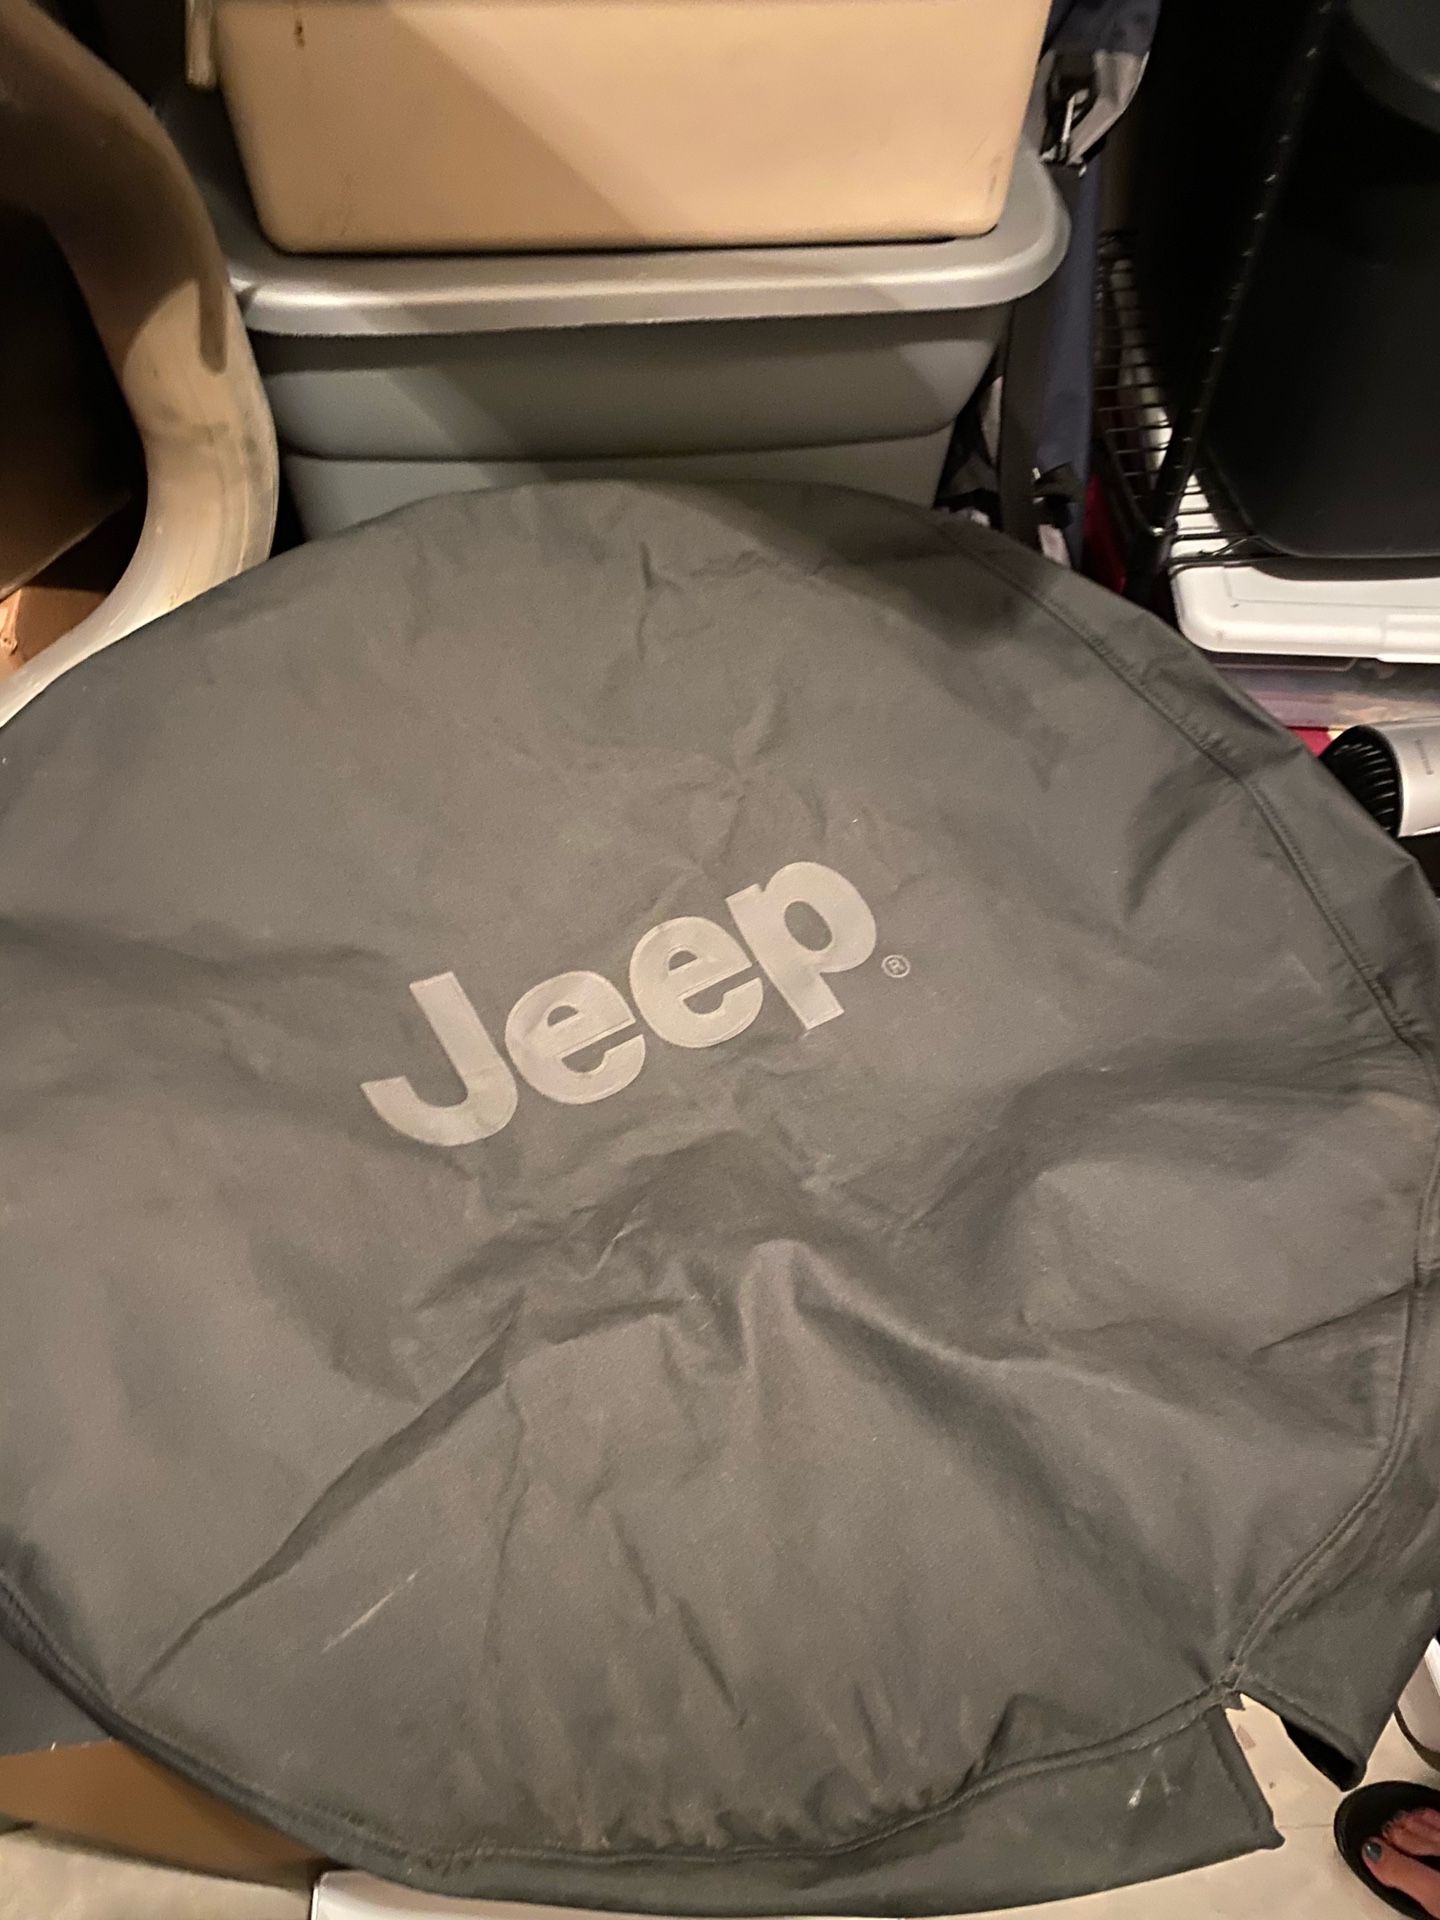 Jeep tire cover